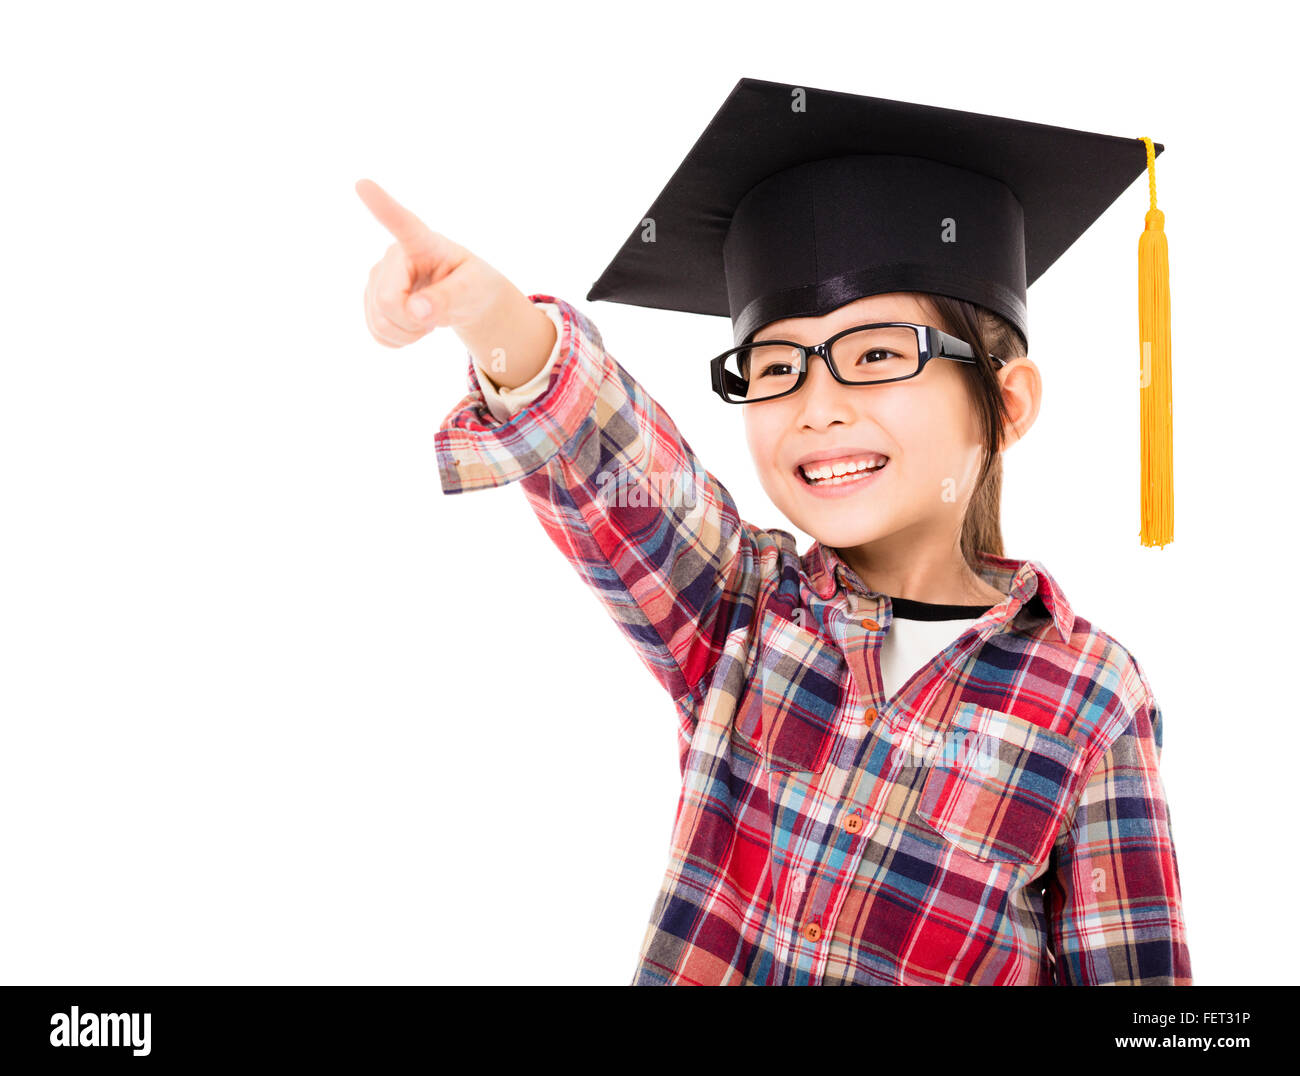 happy school kid in graduation cap with pointing gesture Stock Photo